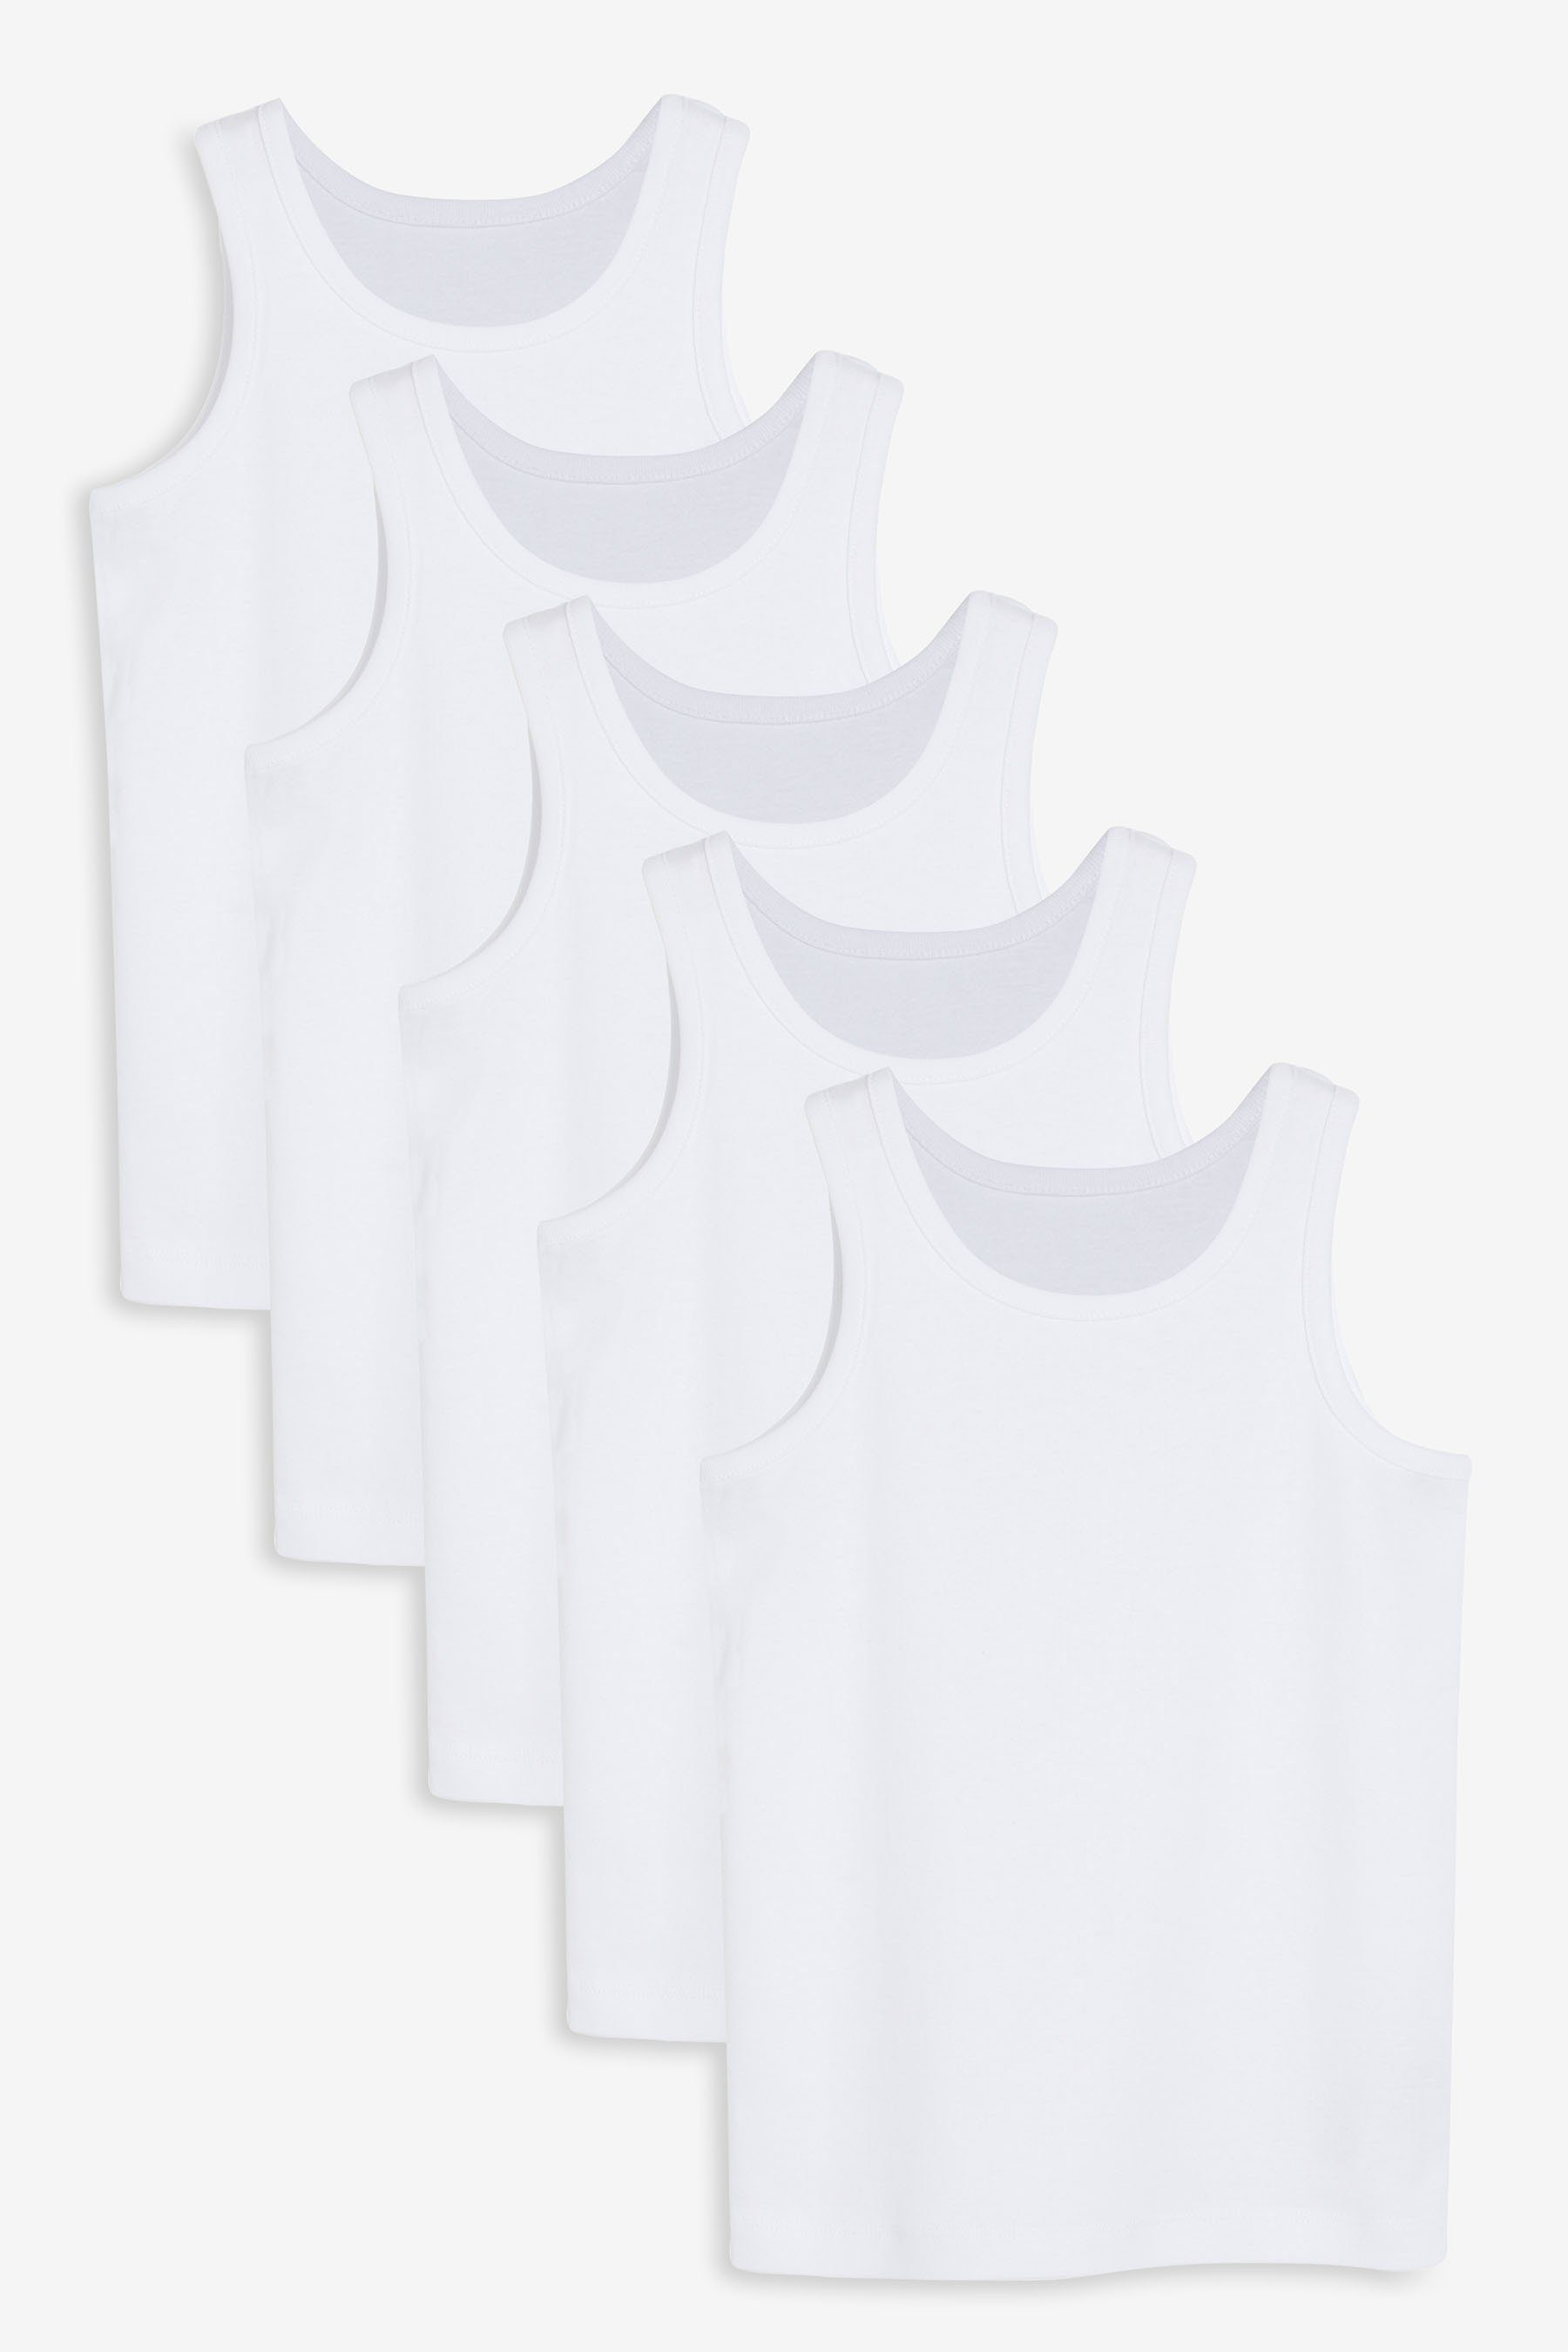 Next Unterhemd Unterhemden aus, 5er-Pack (5-St)